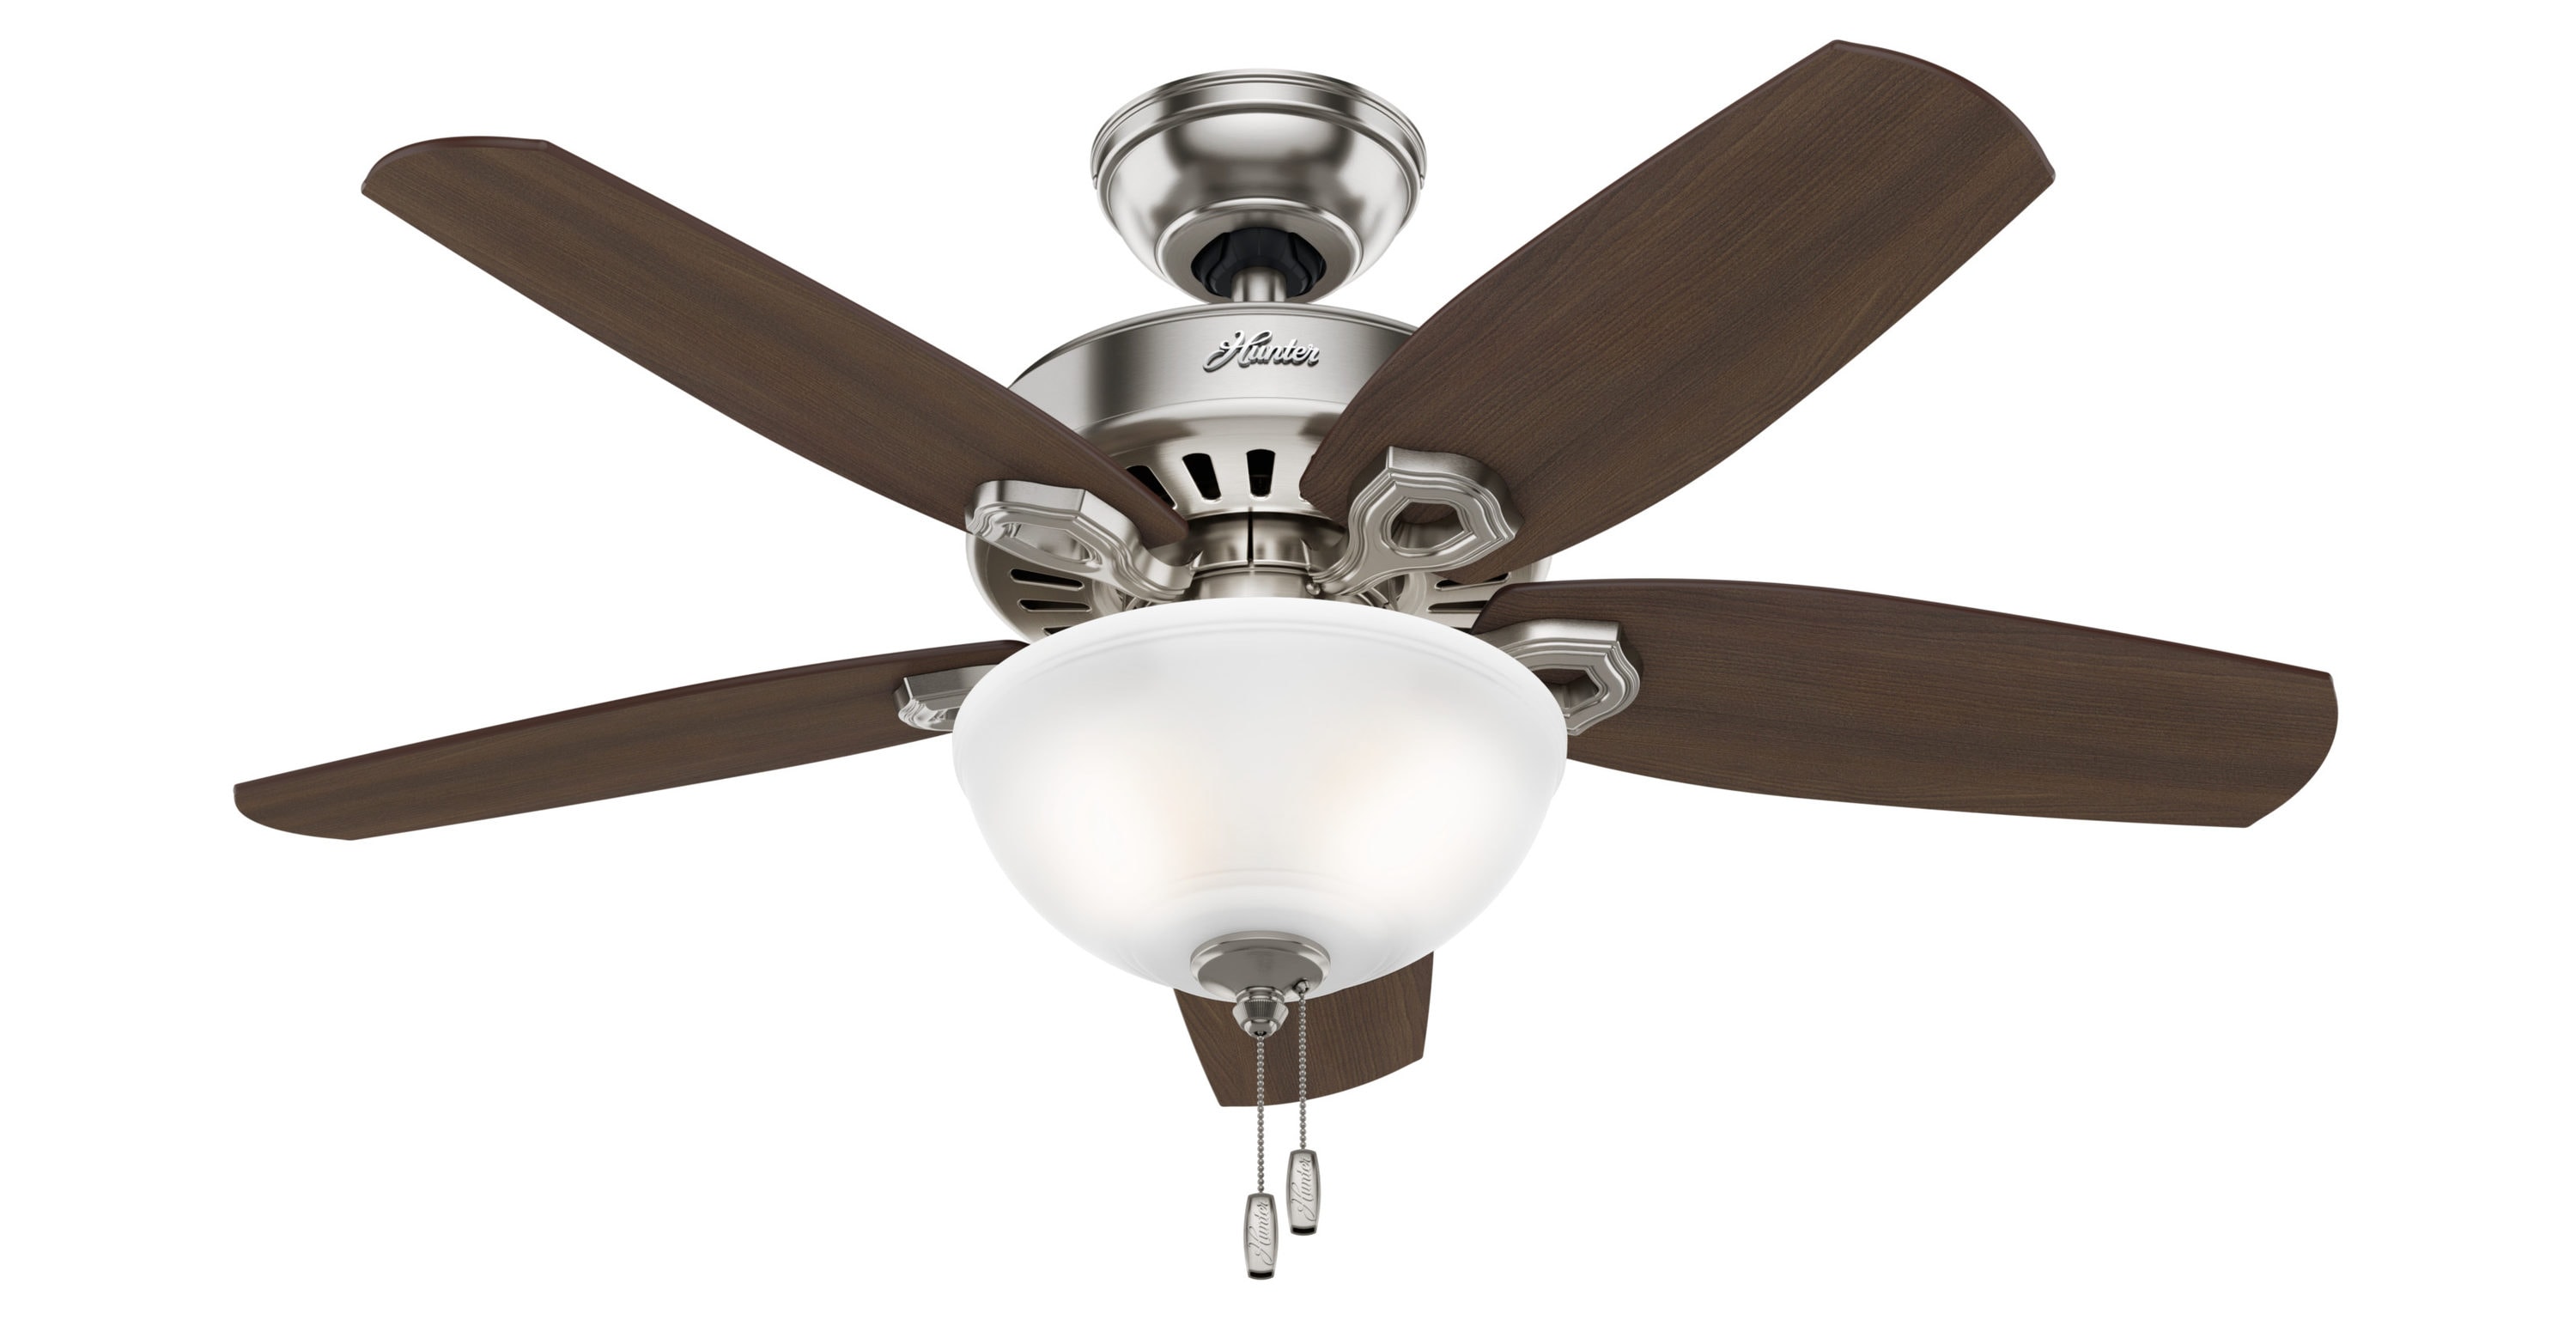 Brushed Nickel Indoor Ceiling Fan